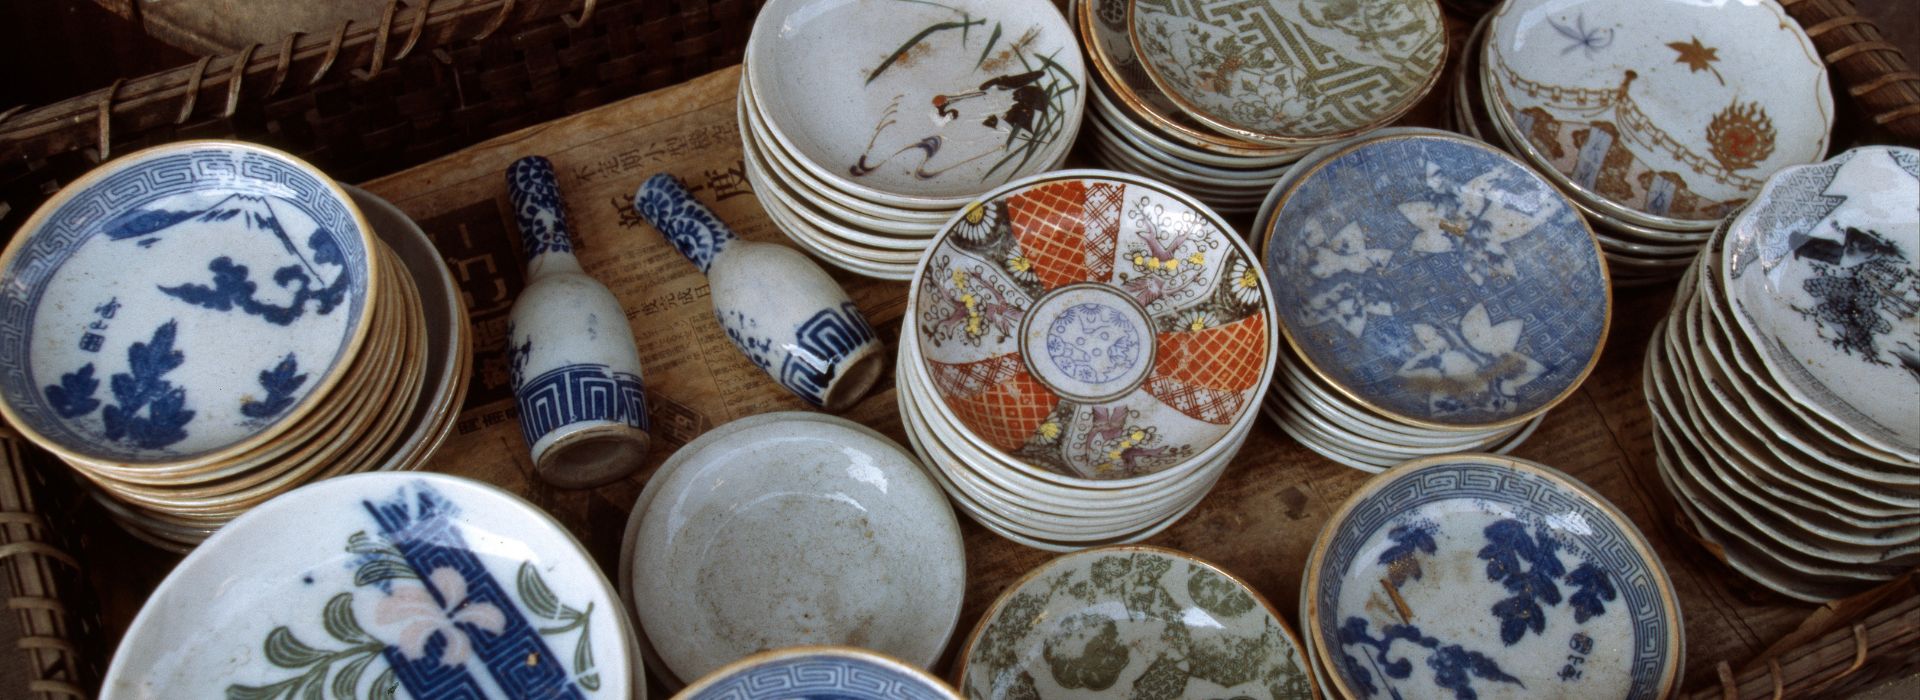 Basket full of colorful antique bowls